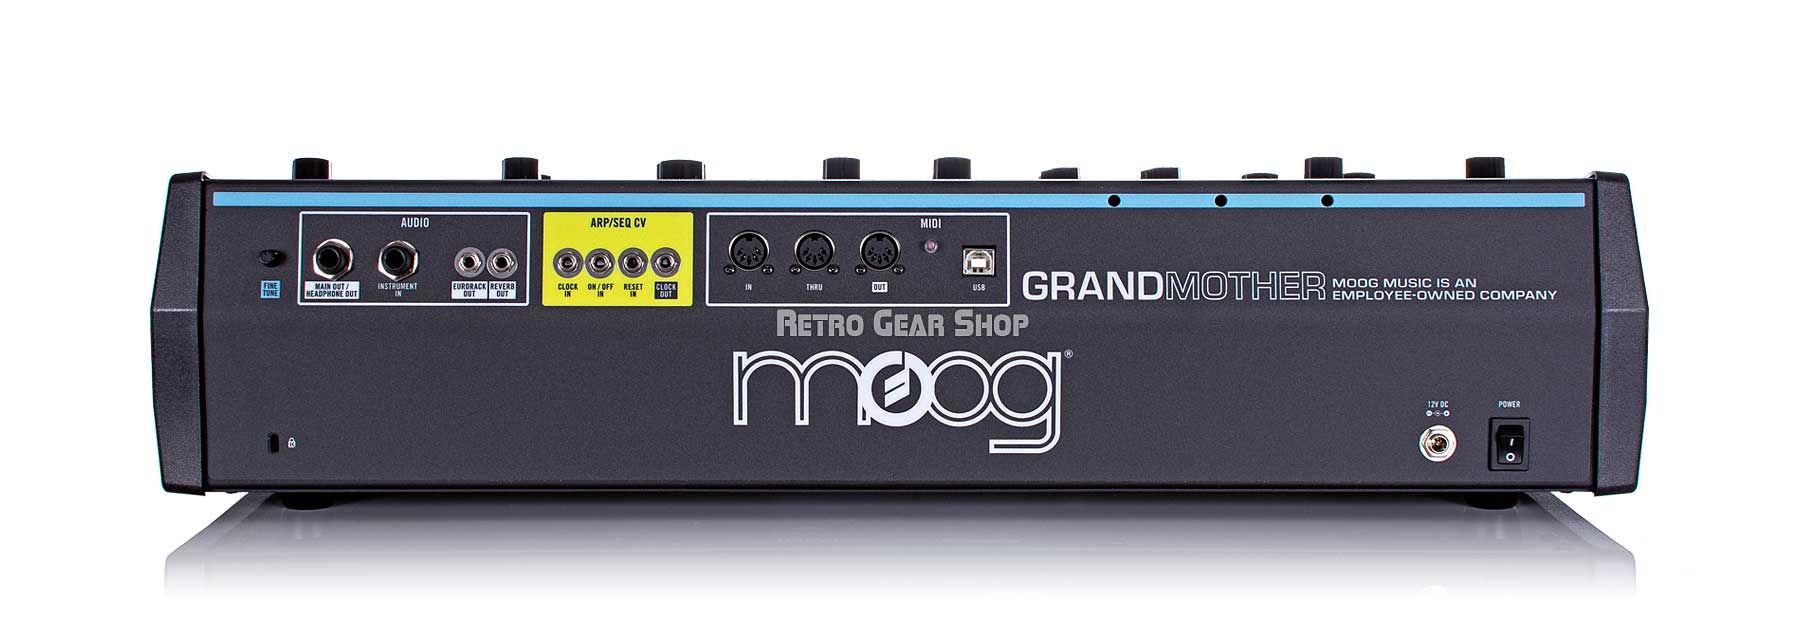 Moog Grandmother Rear